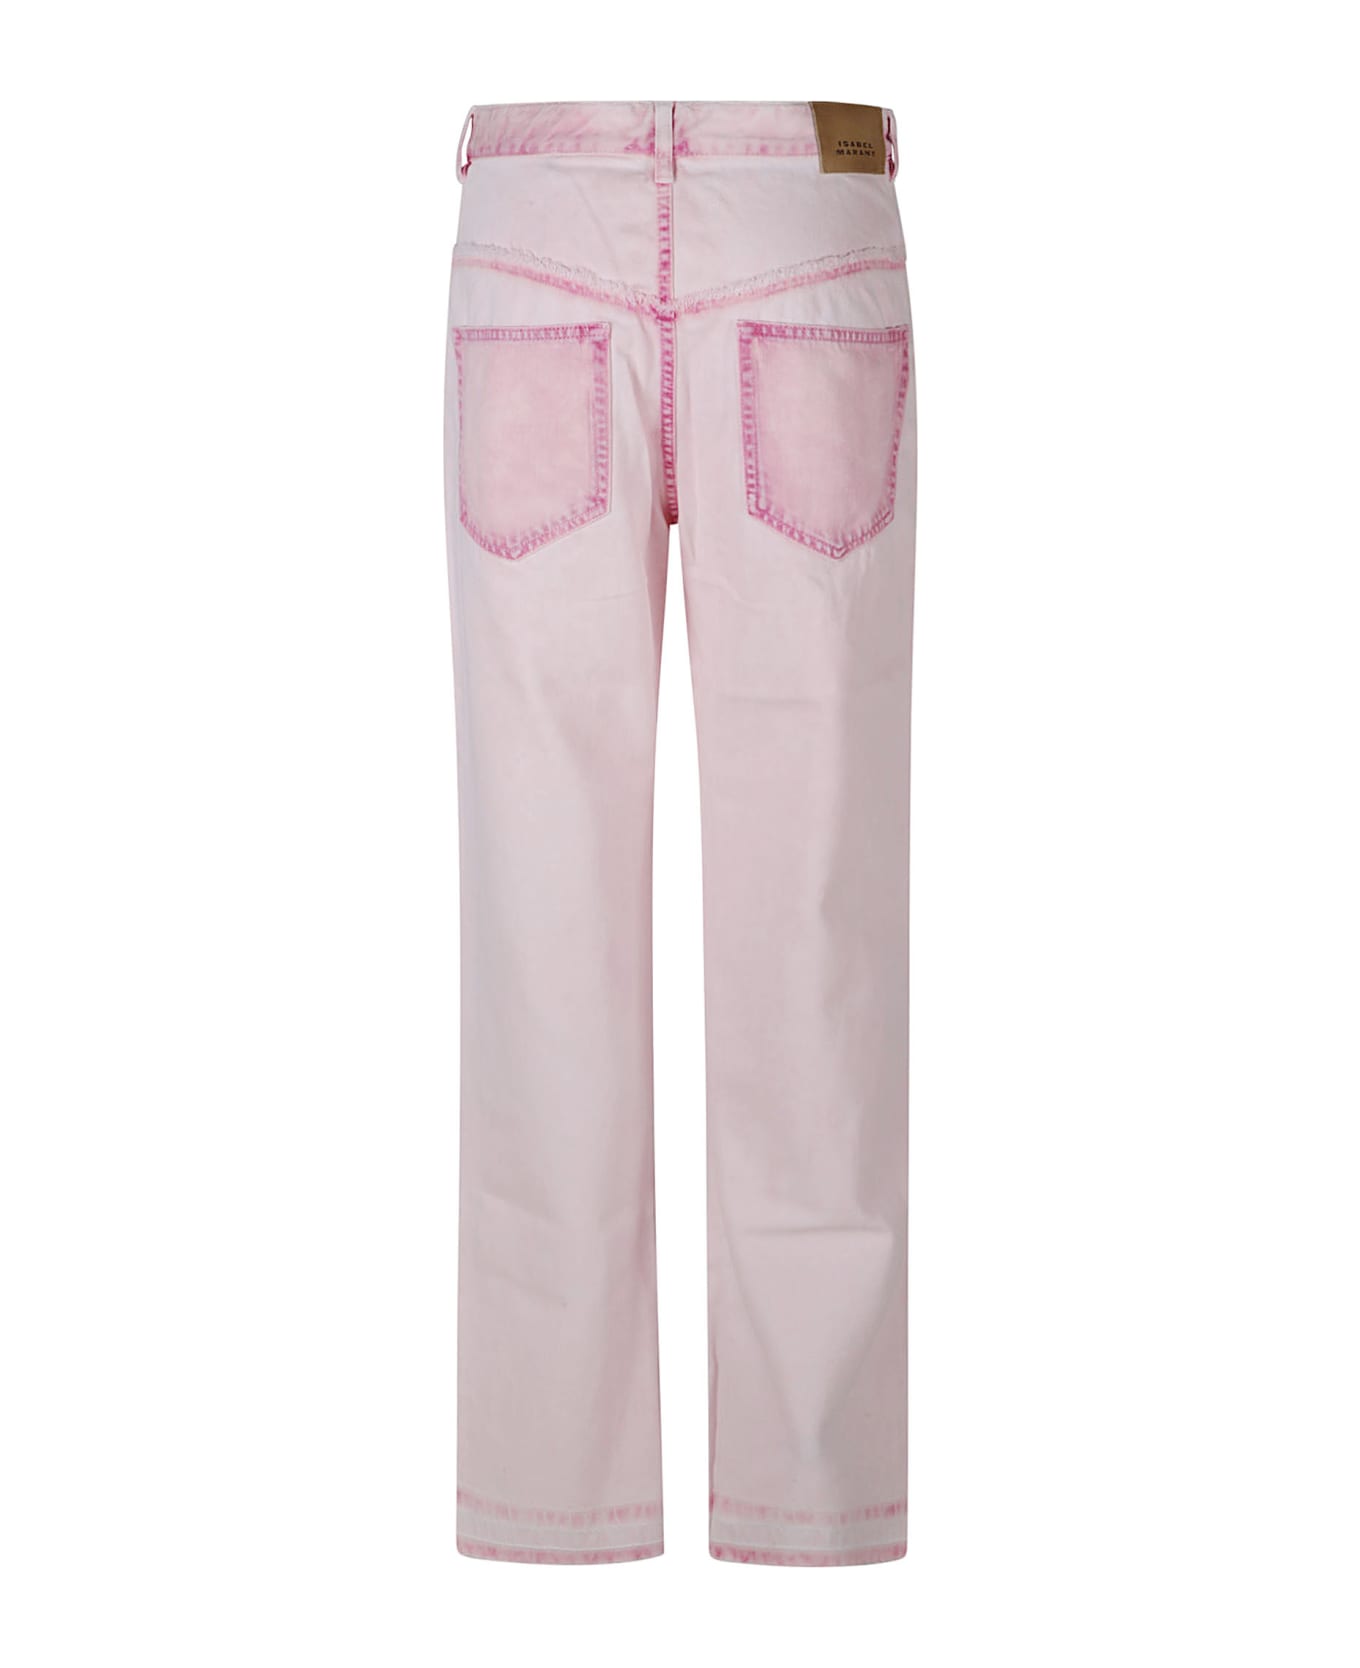 Isabel Marant Noemie Jeans - Light Pink デニム